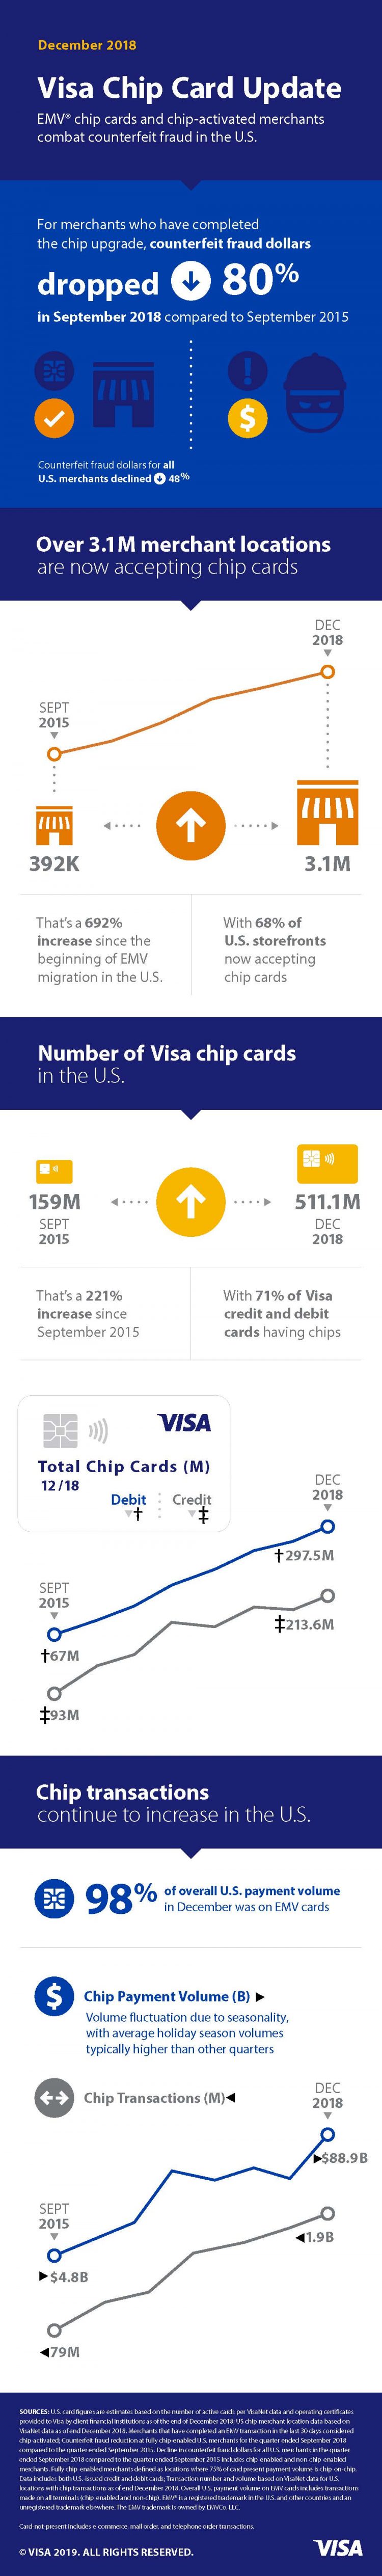 Visa Chip Card Update